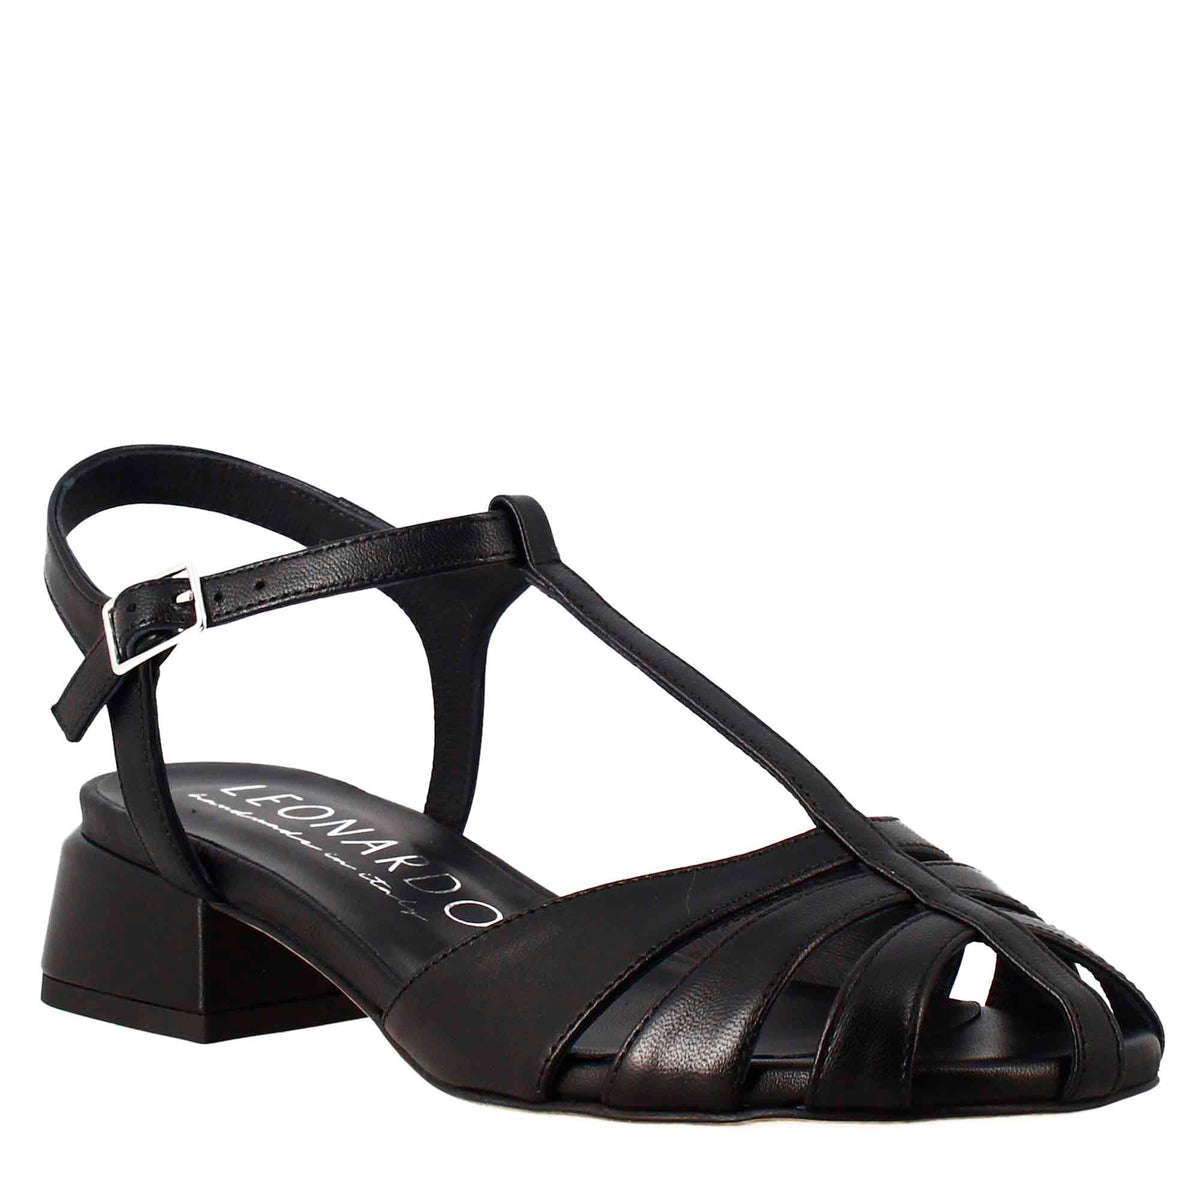 Cage-shaped black sandal for women